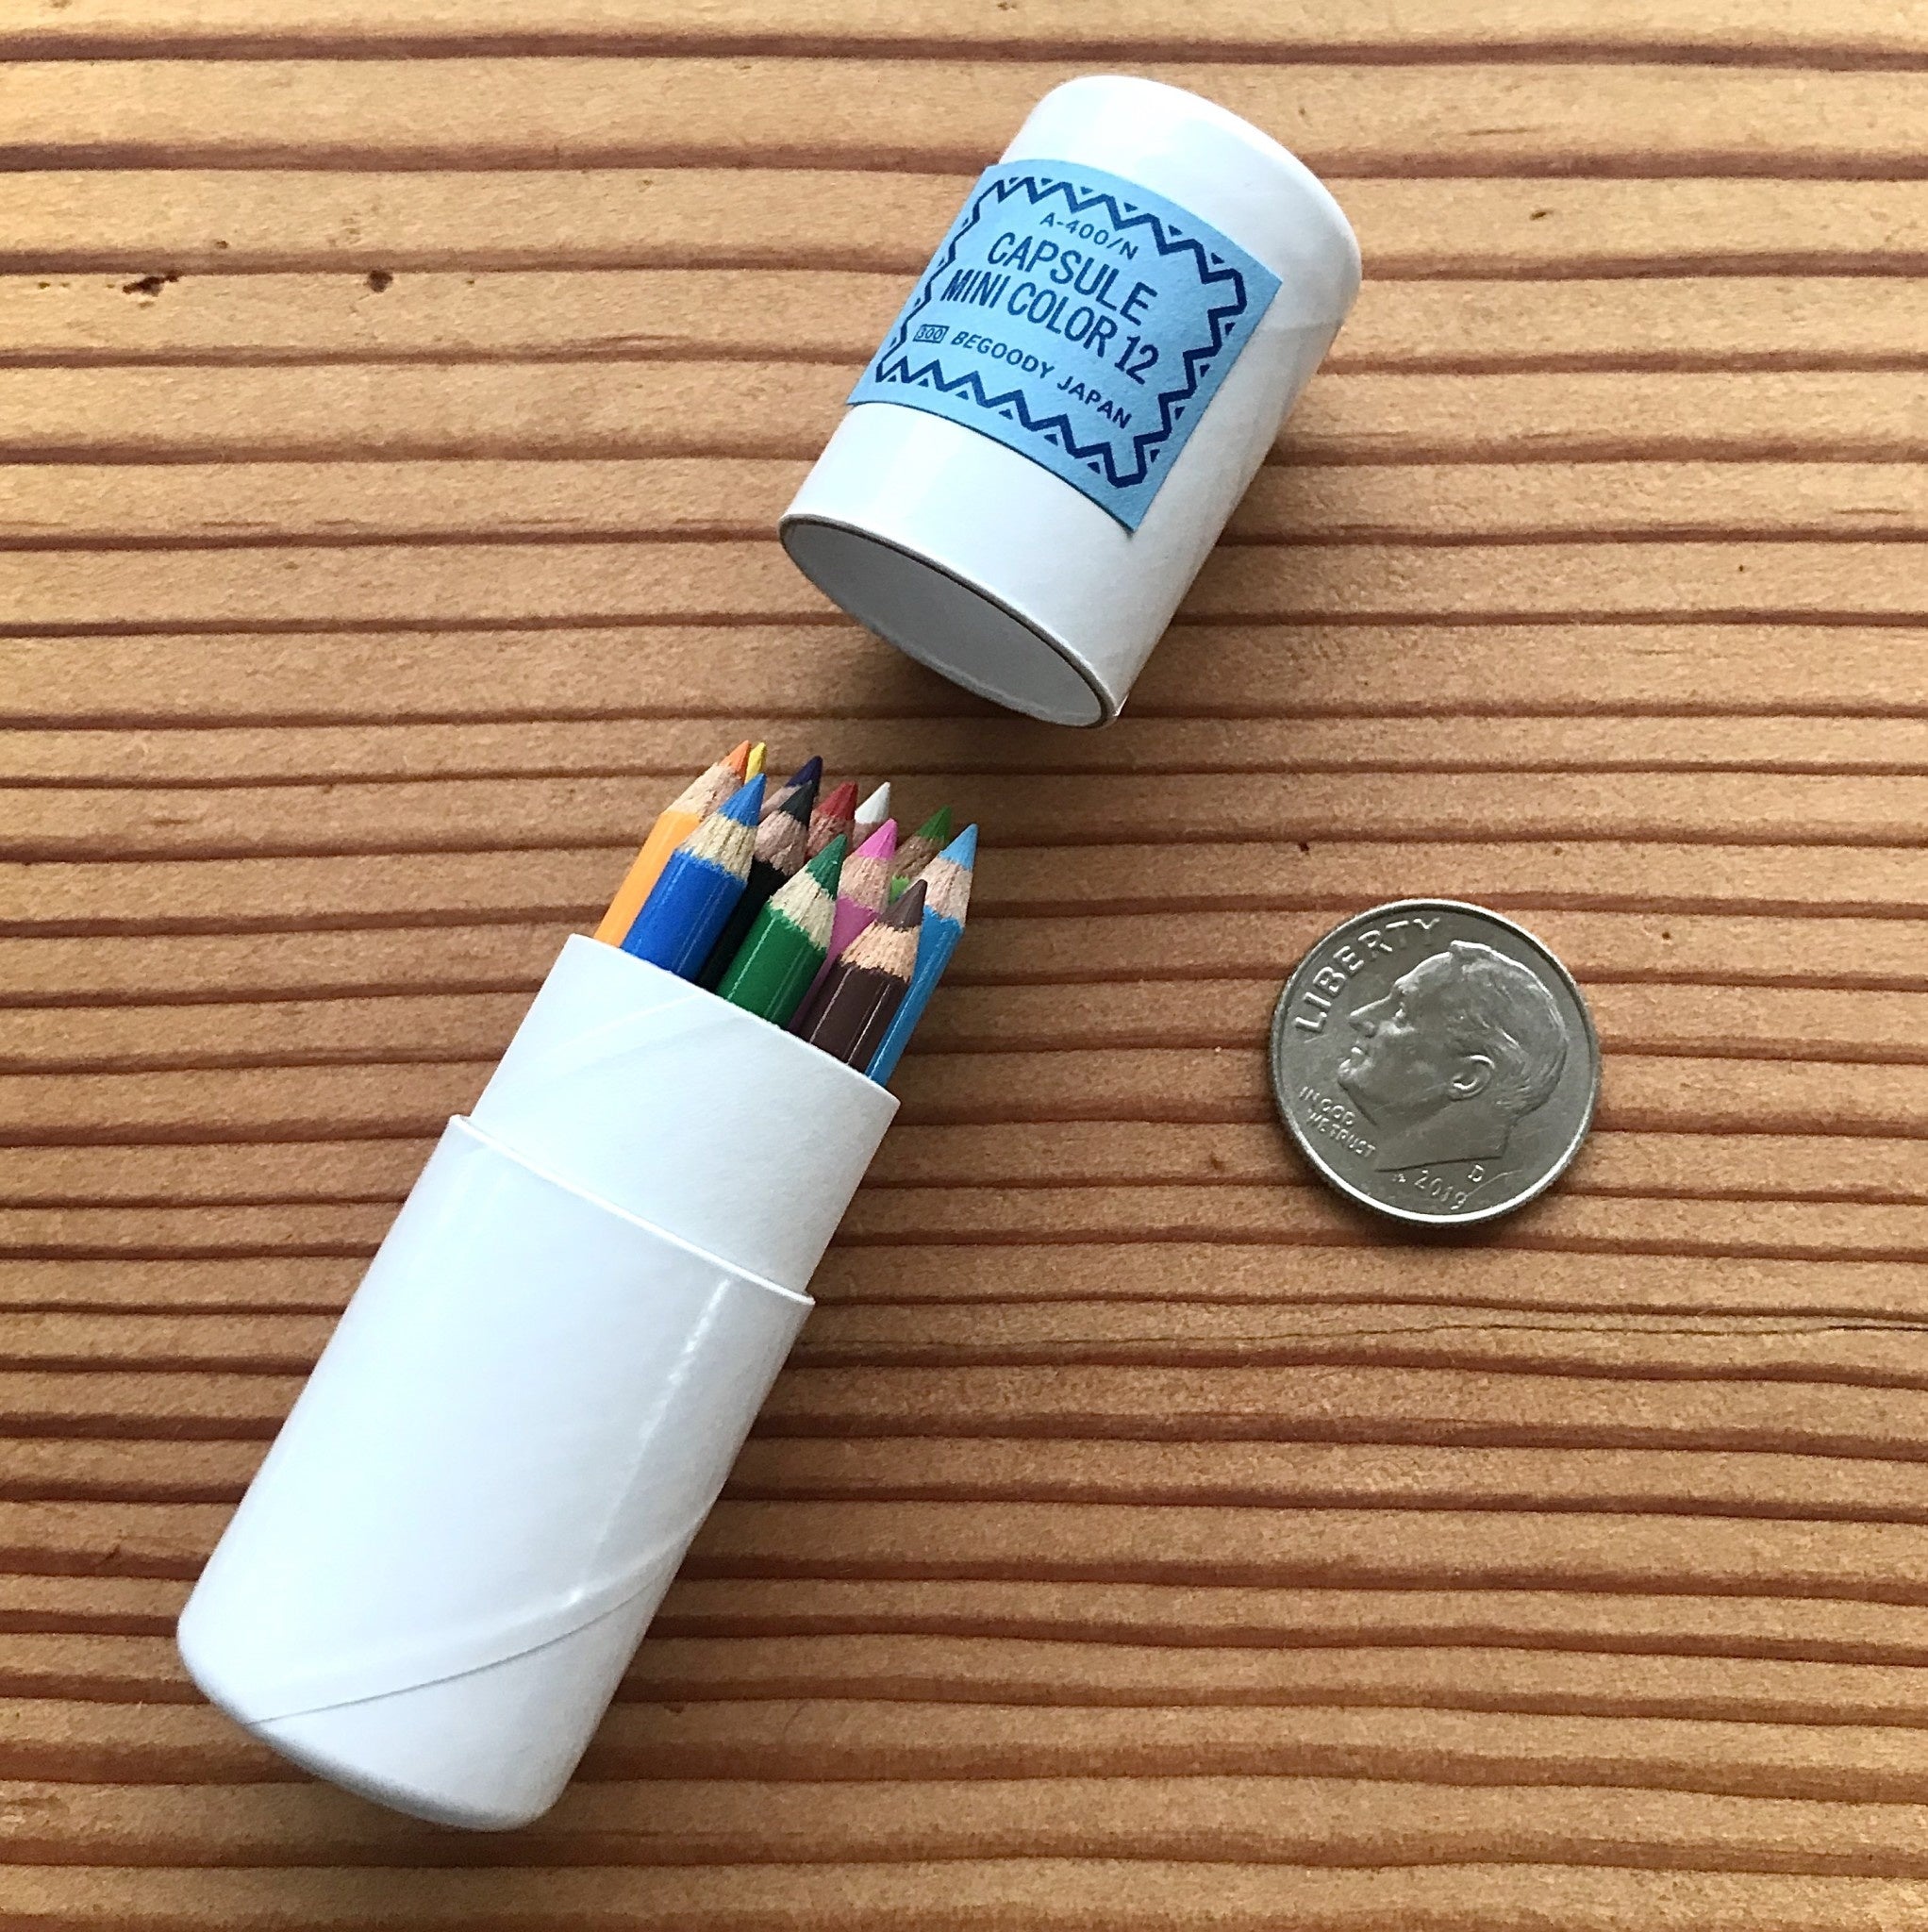 Capsule Mini Color Pencil - Set of 12